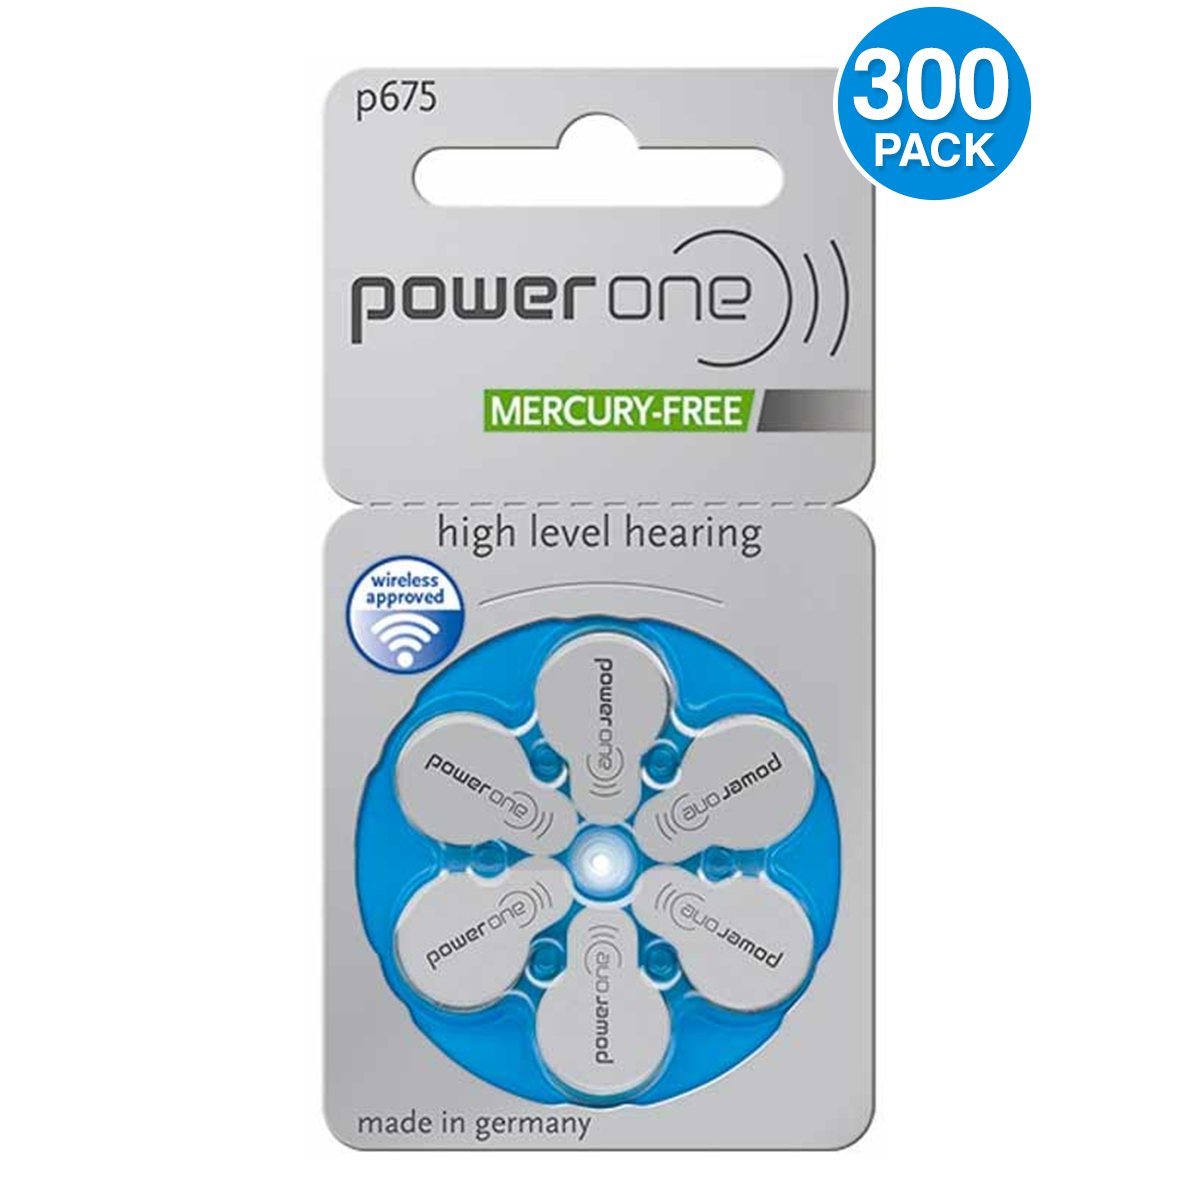 Power One Size 675 Hearing Aid Battery Mercury-Free (300 pcs.)